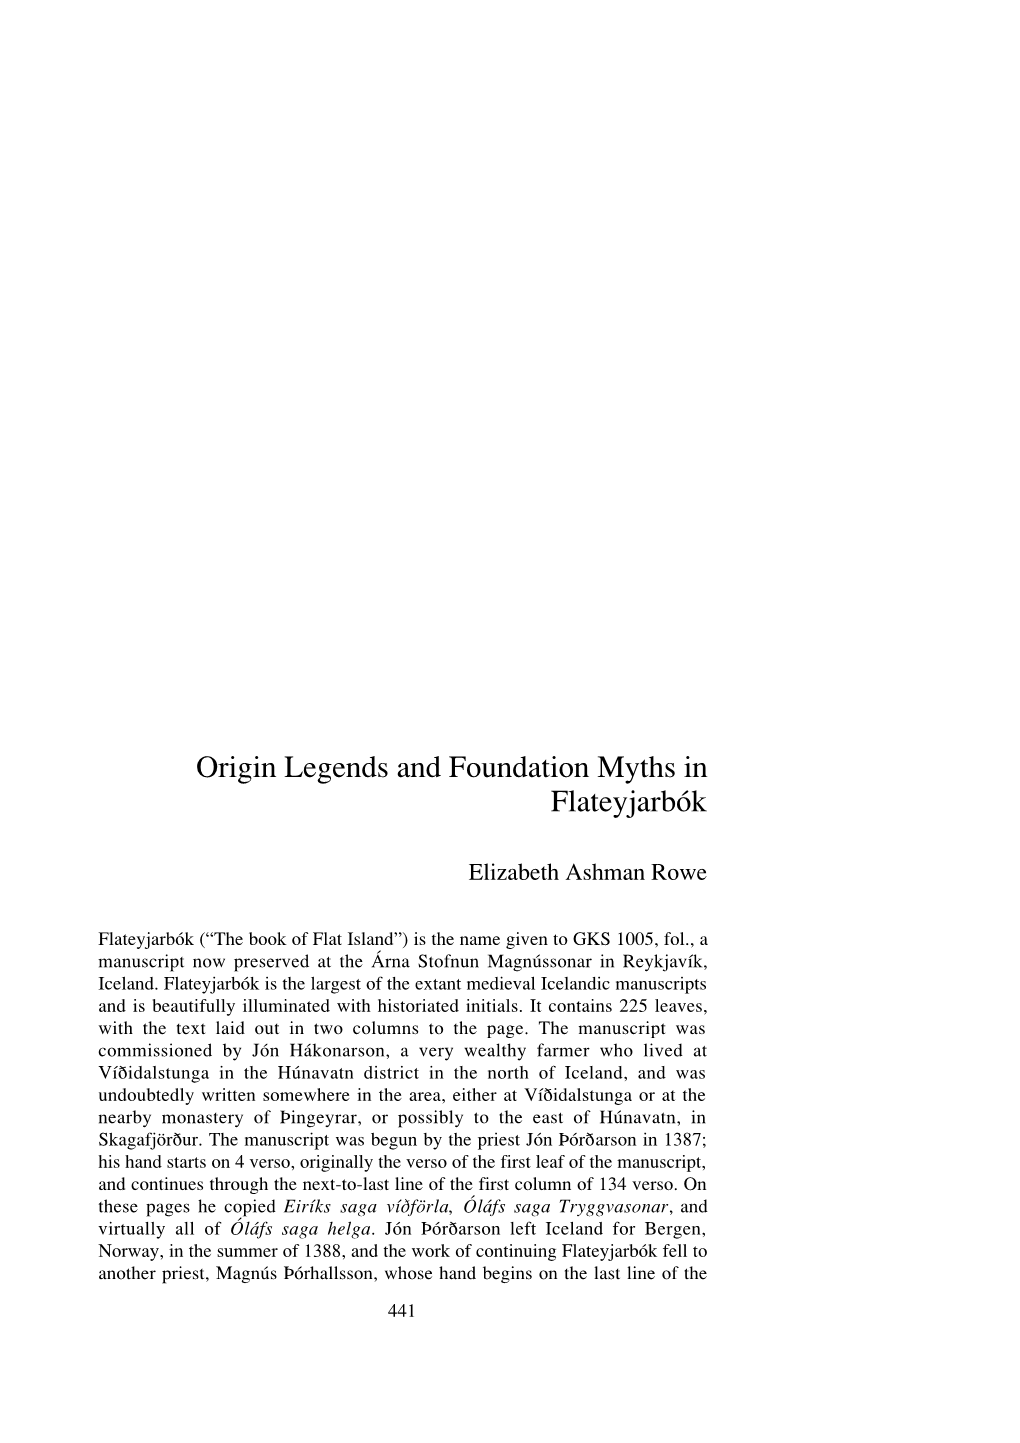 Origin Legends and Foundation Myths in Flateyjarbók